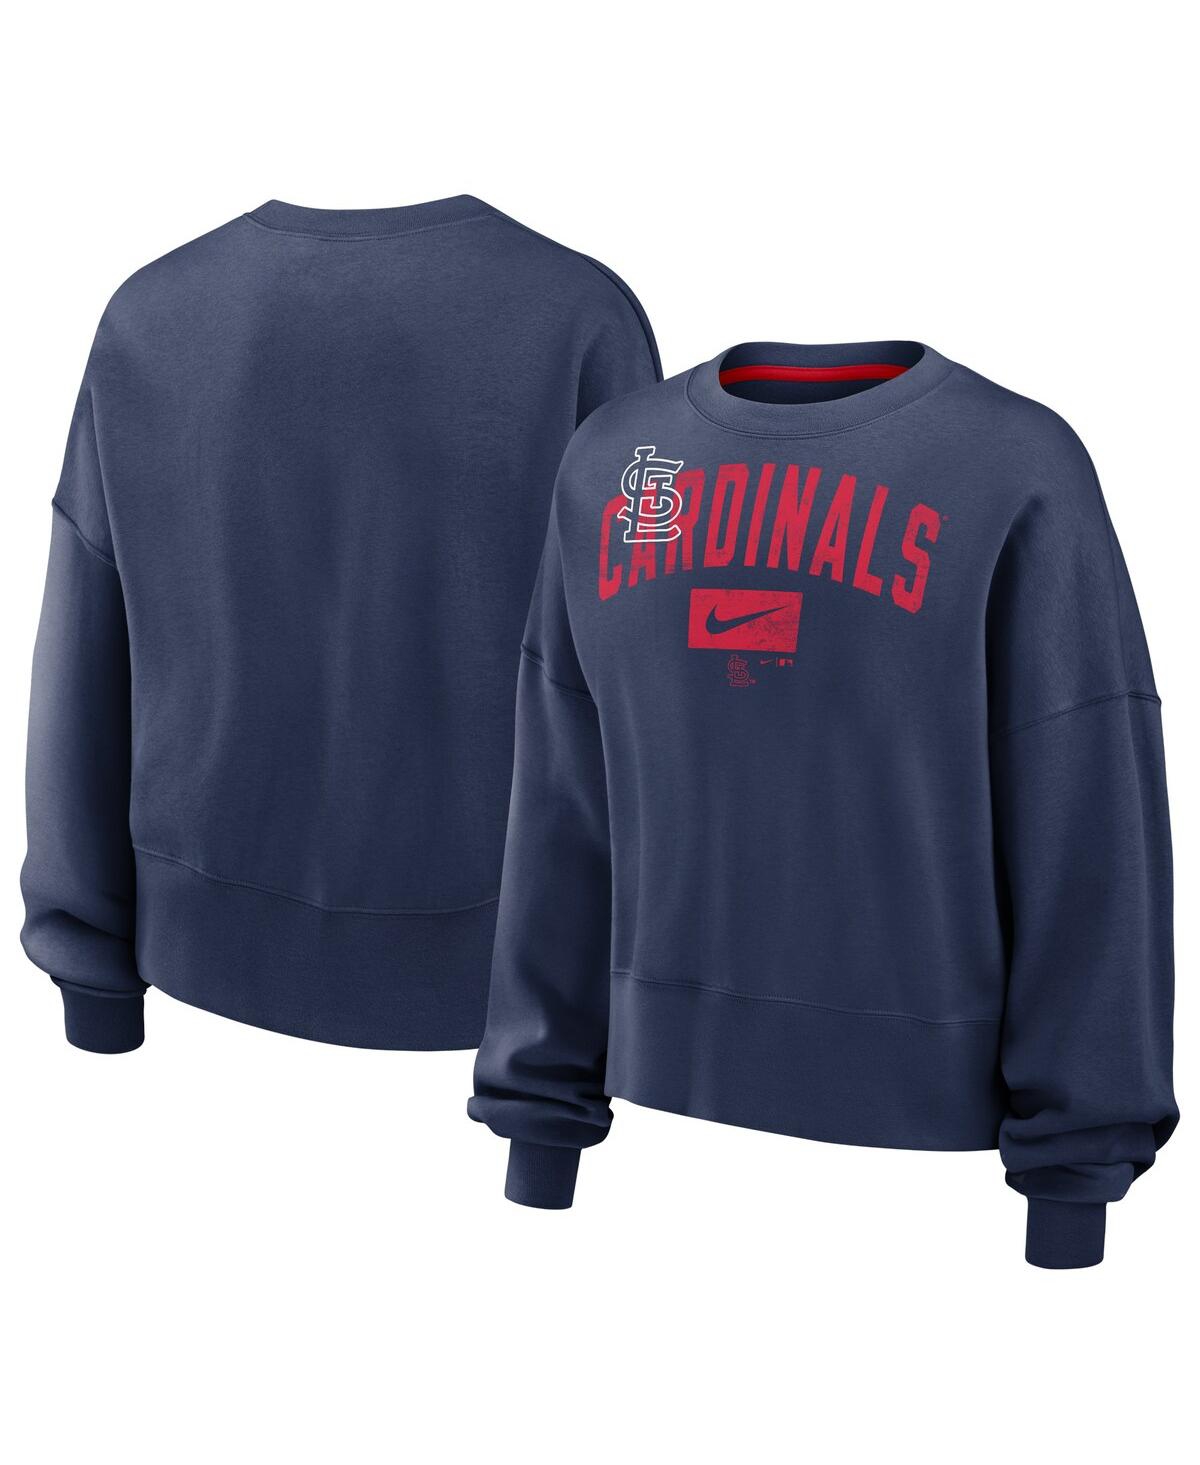 Women's Nike Navy Distressed St. Louis Cardinals Pullover Sweatshirt - Navy